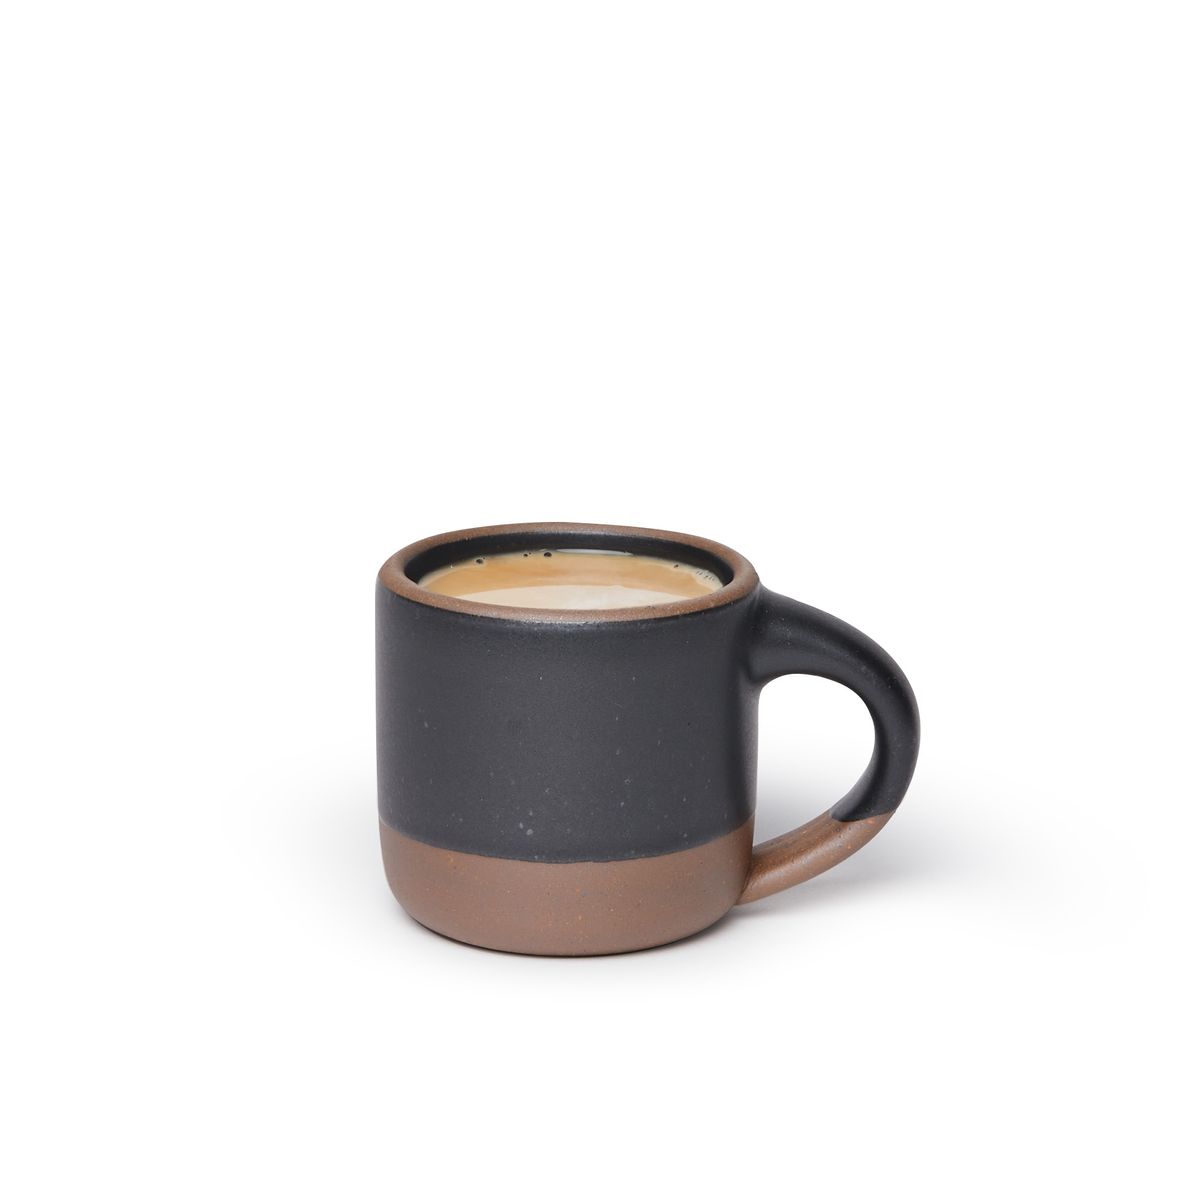 The Small Mug in Black Mountain, full of coffee